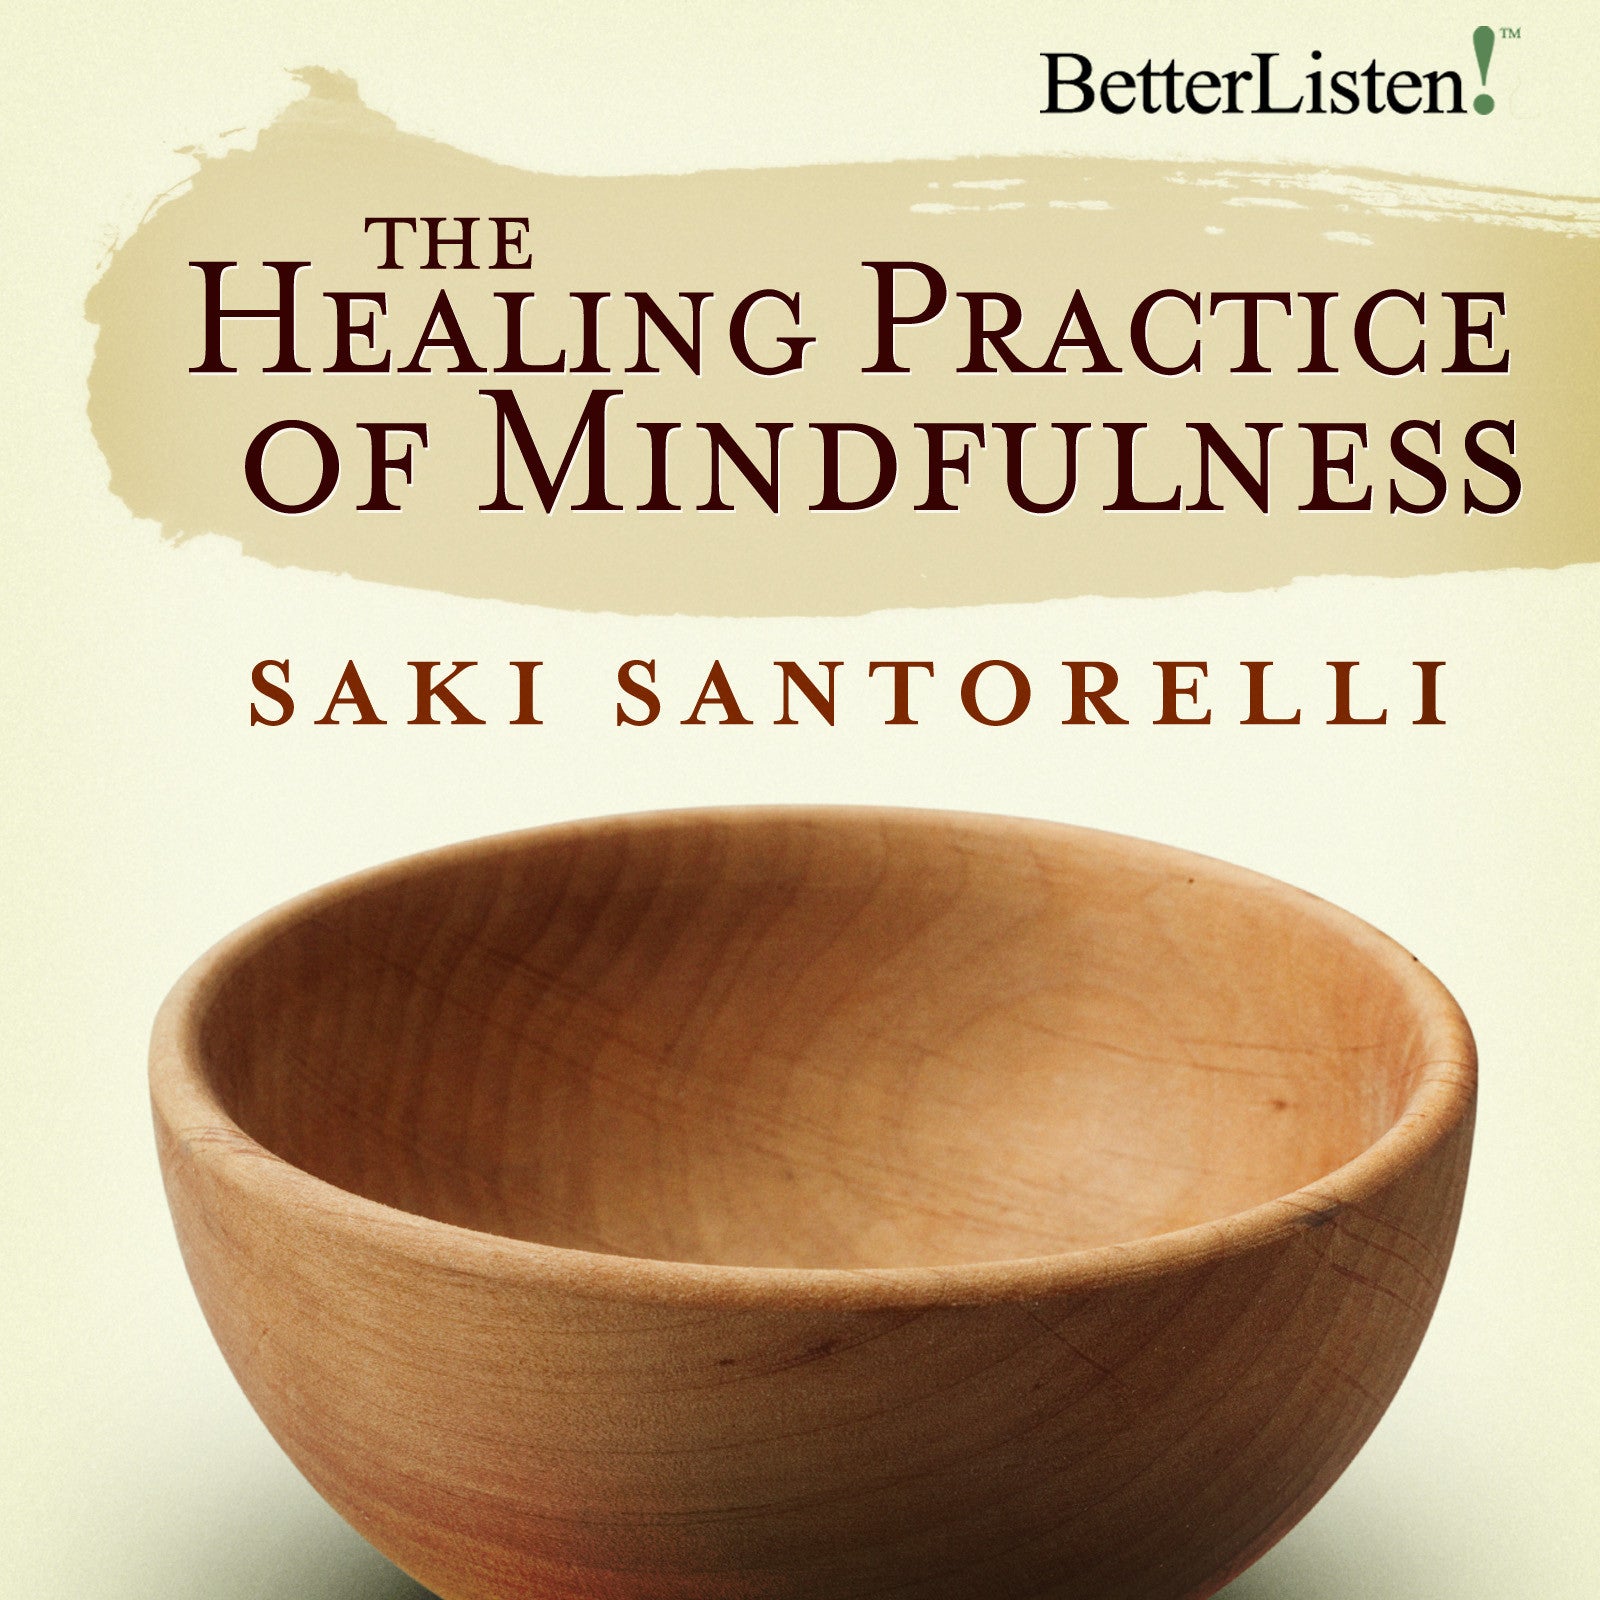 The Healing Practice of Mindfulness with Saki Santorelli - BetterListen!